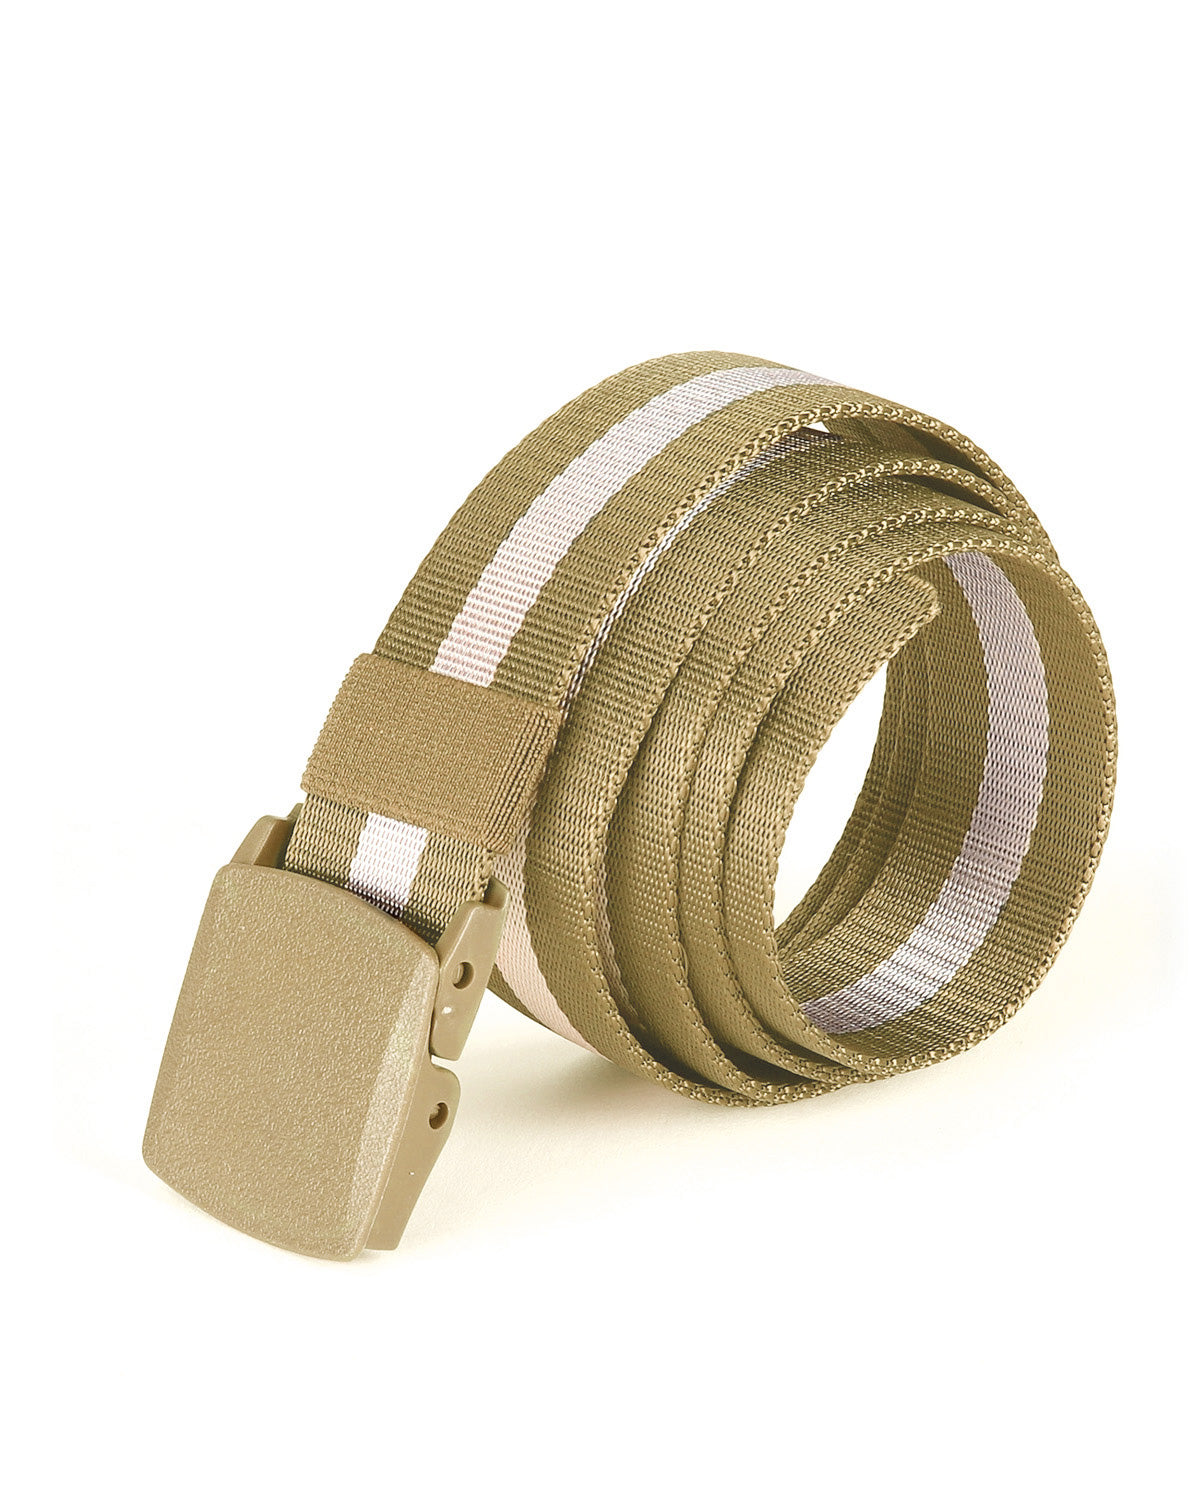 Men's One Size Adjustable Strap Stripe Nylon Web Belt With Plastic Buckle